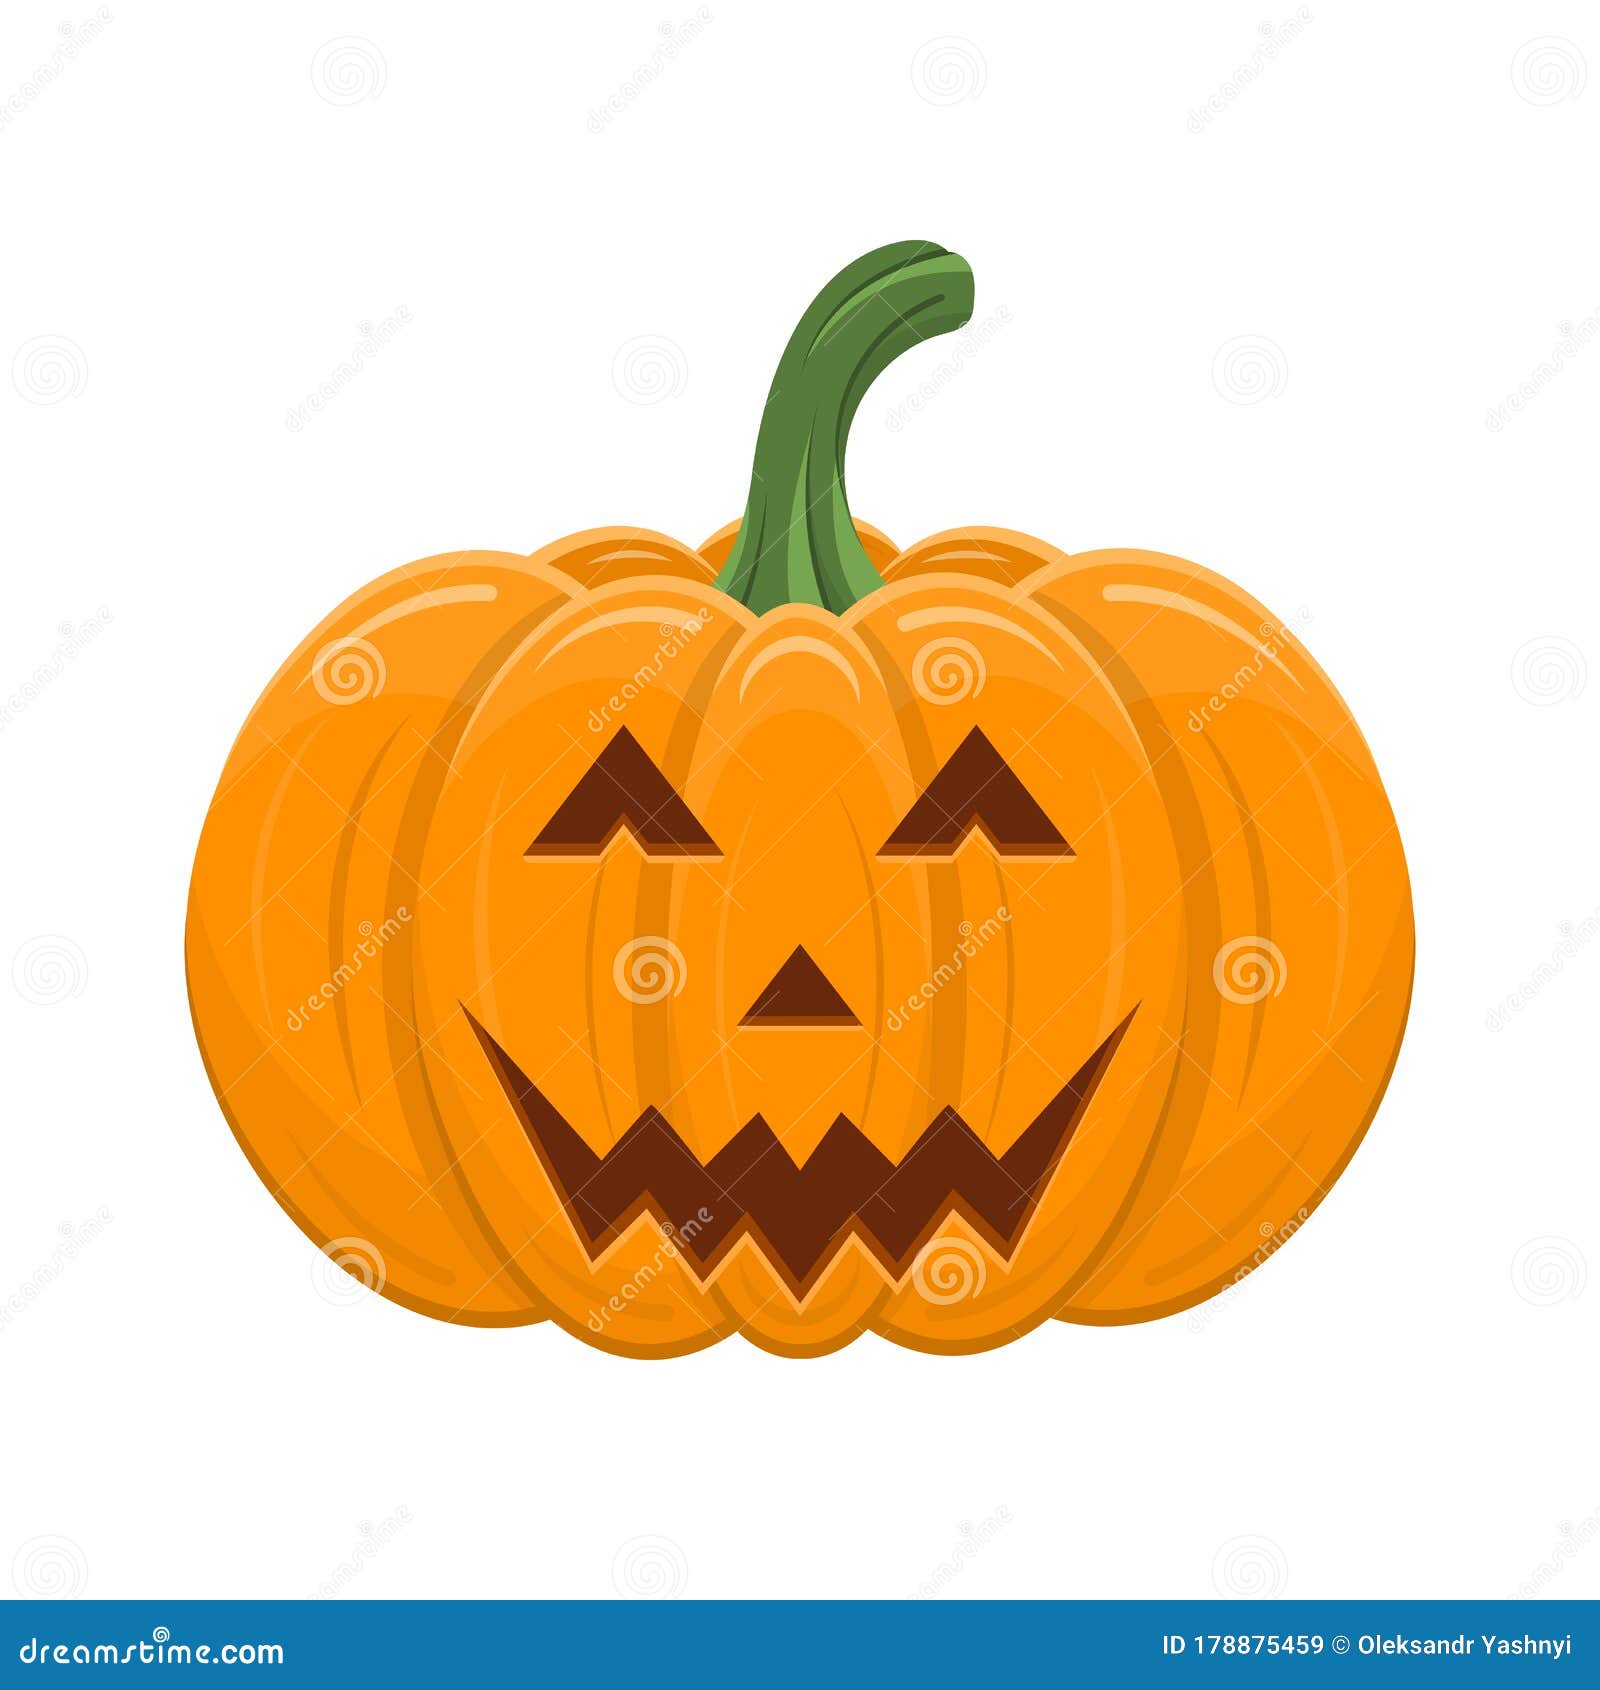 Halloween Pumpkin Isolated on White Background. Cartoon Orange Pumpkin ...